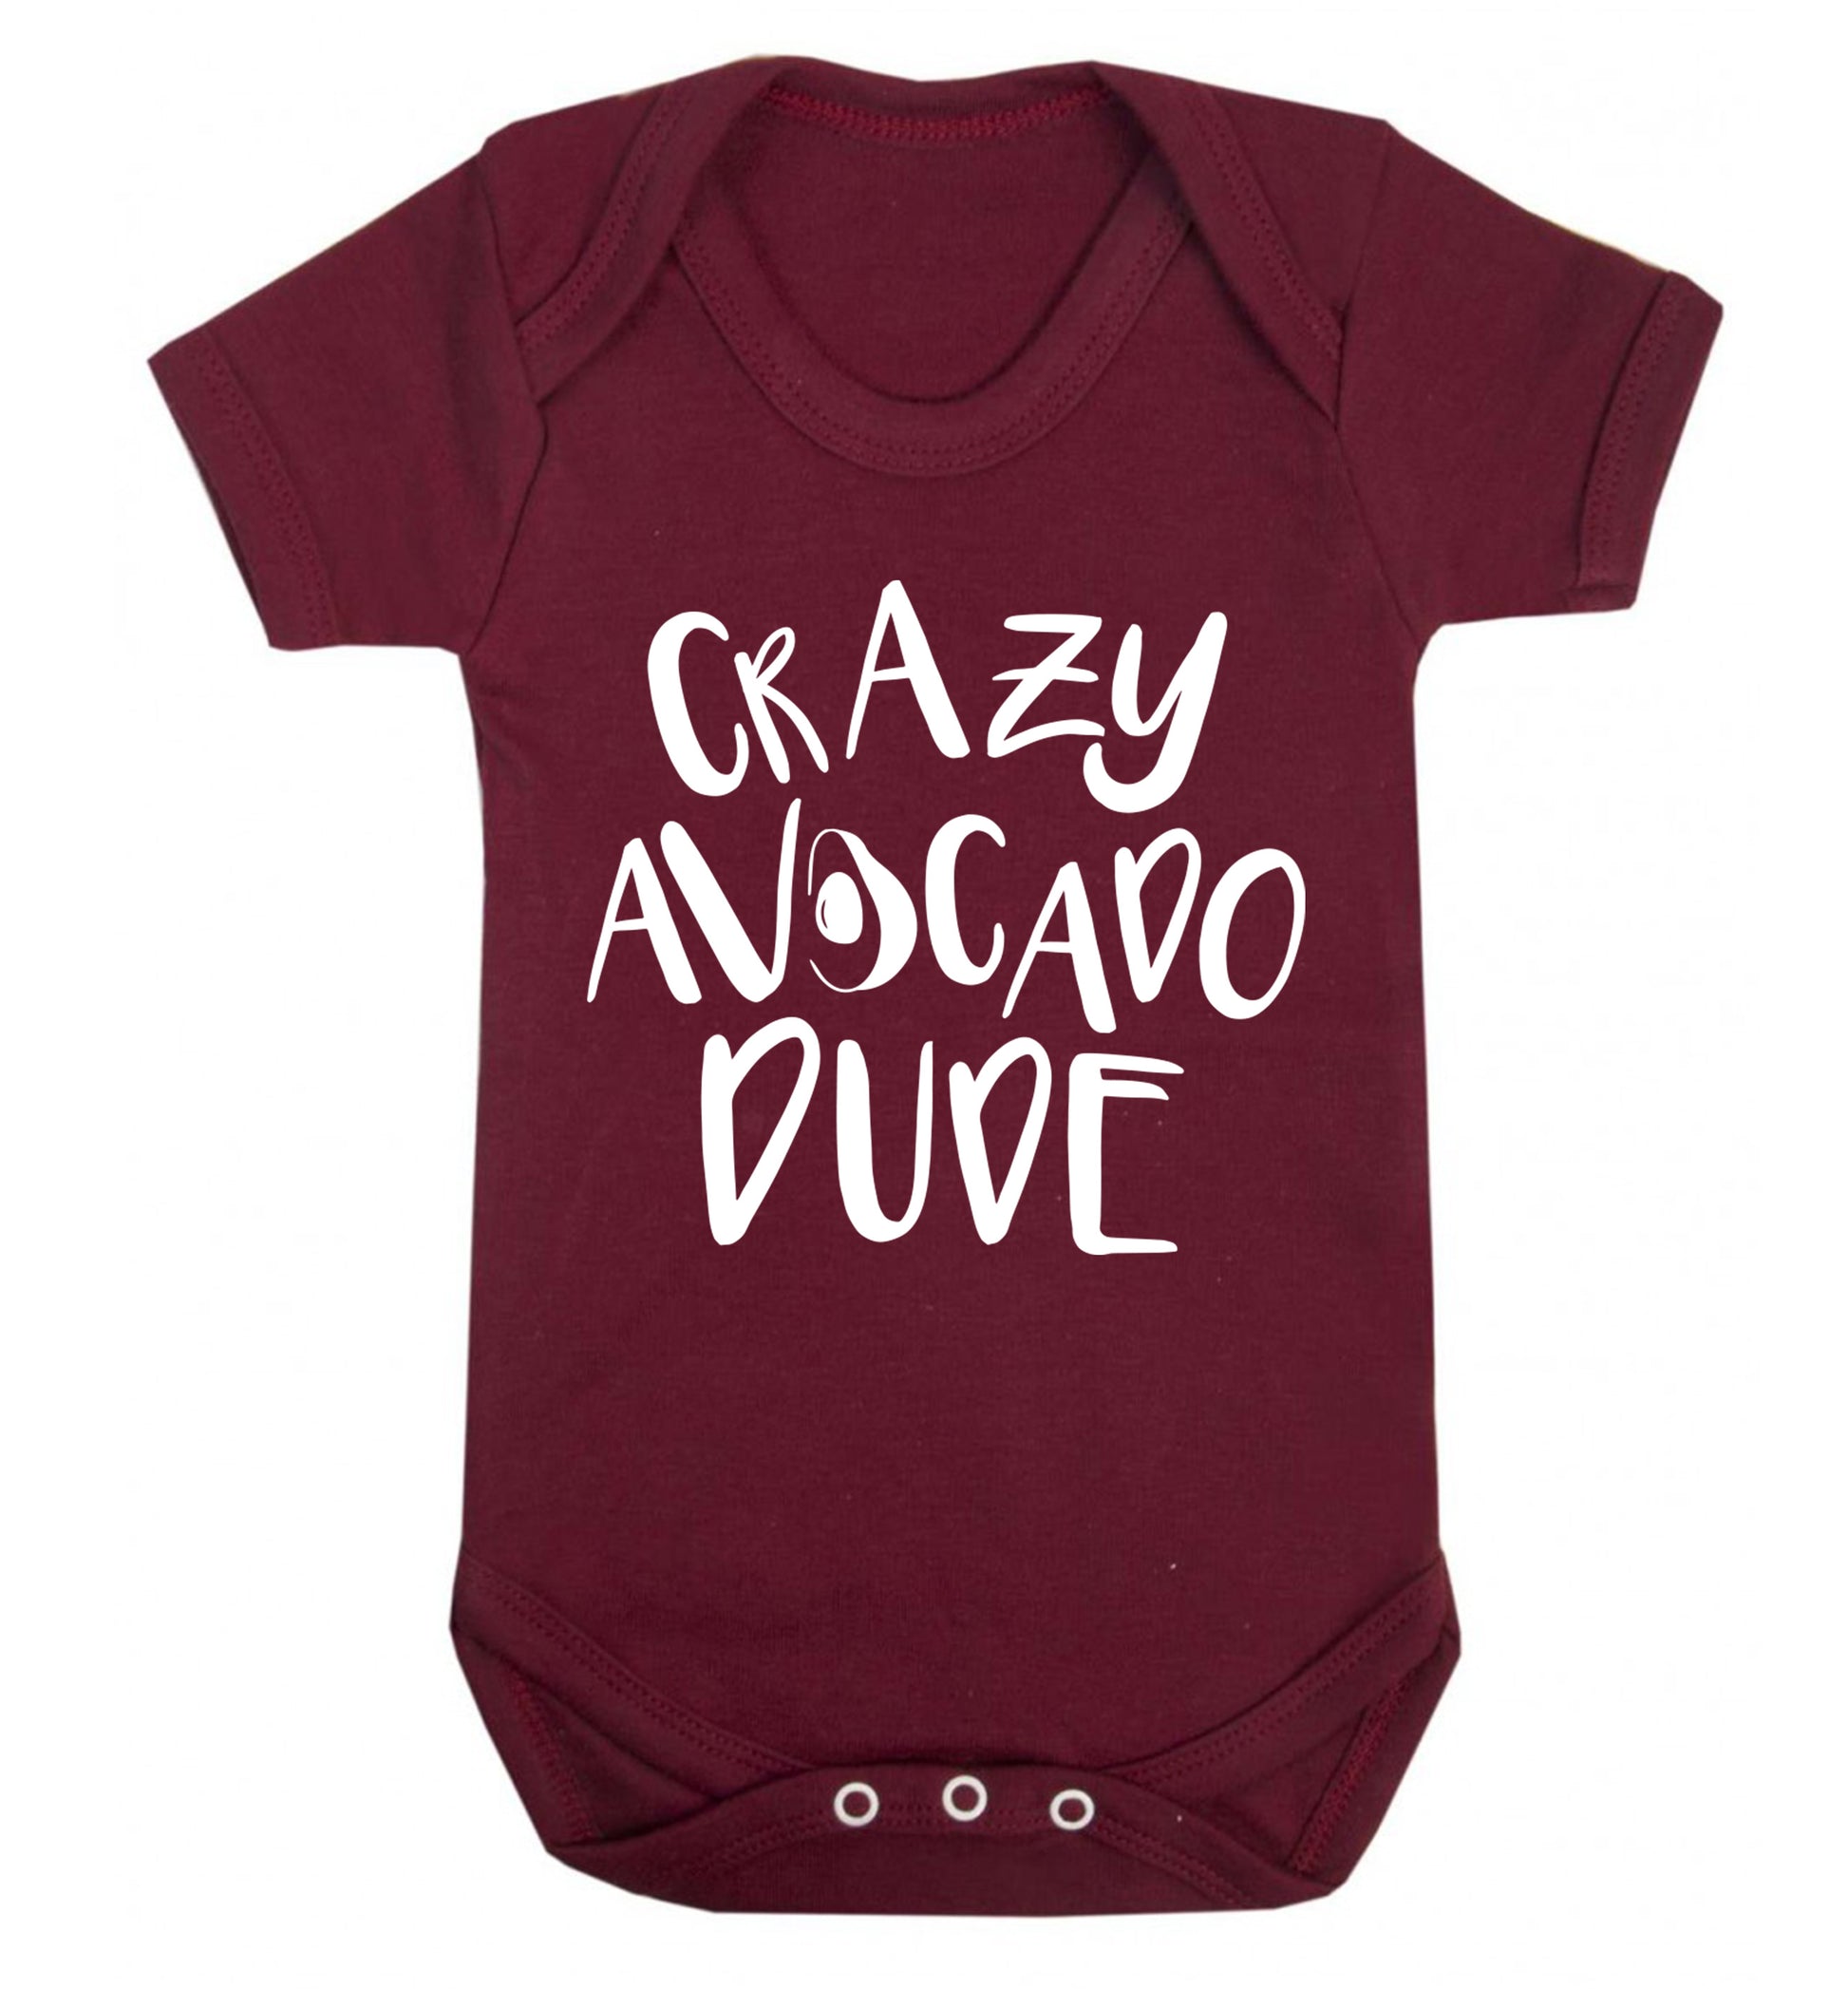 Crazy avocado dude Baby Vest maroon 18-24 months